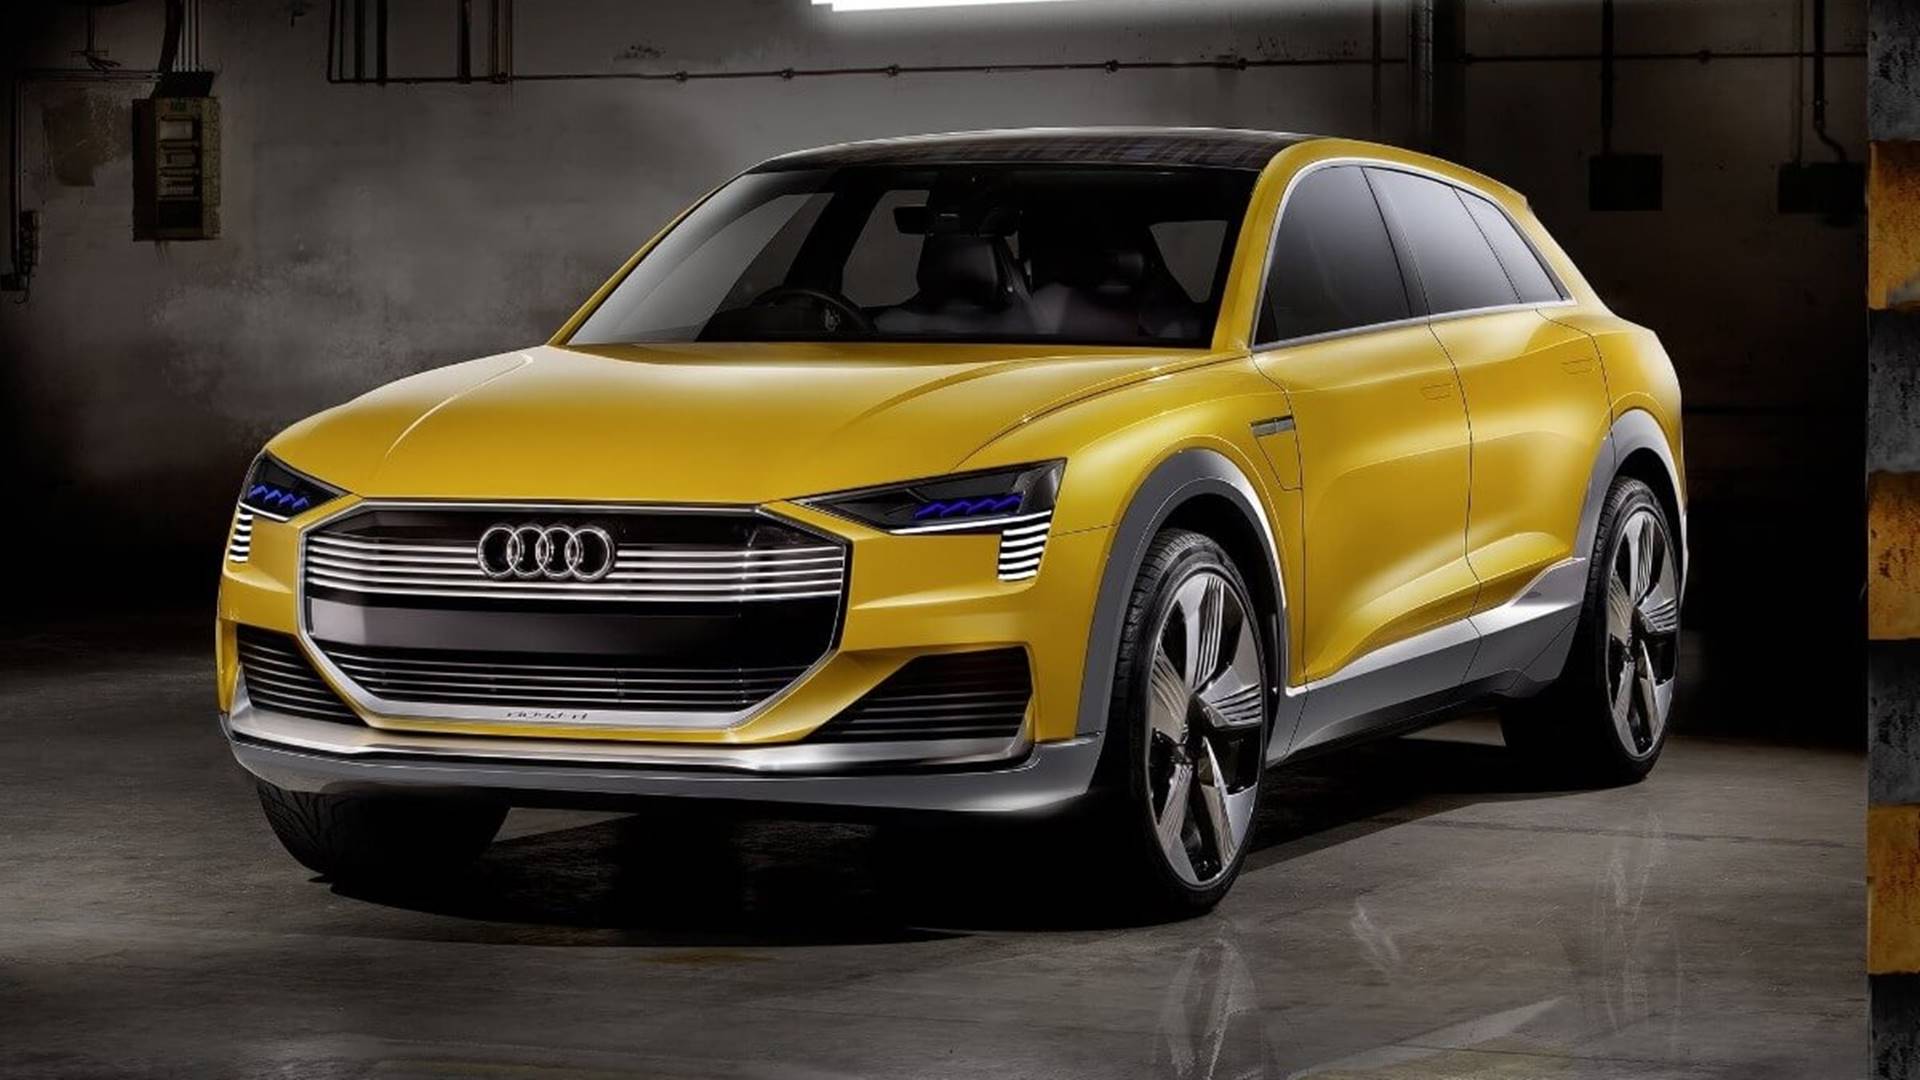 Audi hydrogen cars